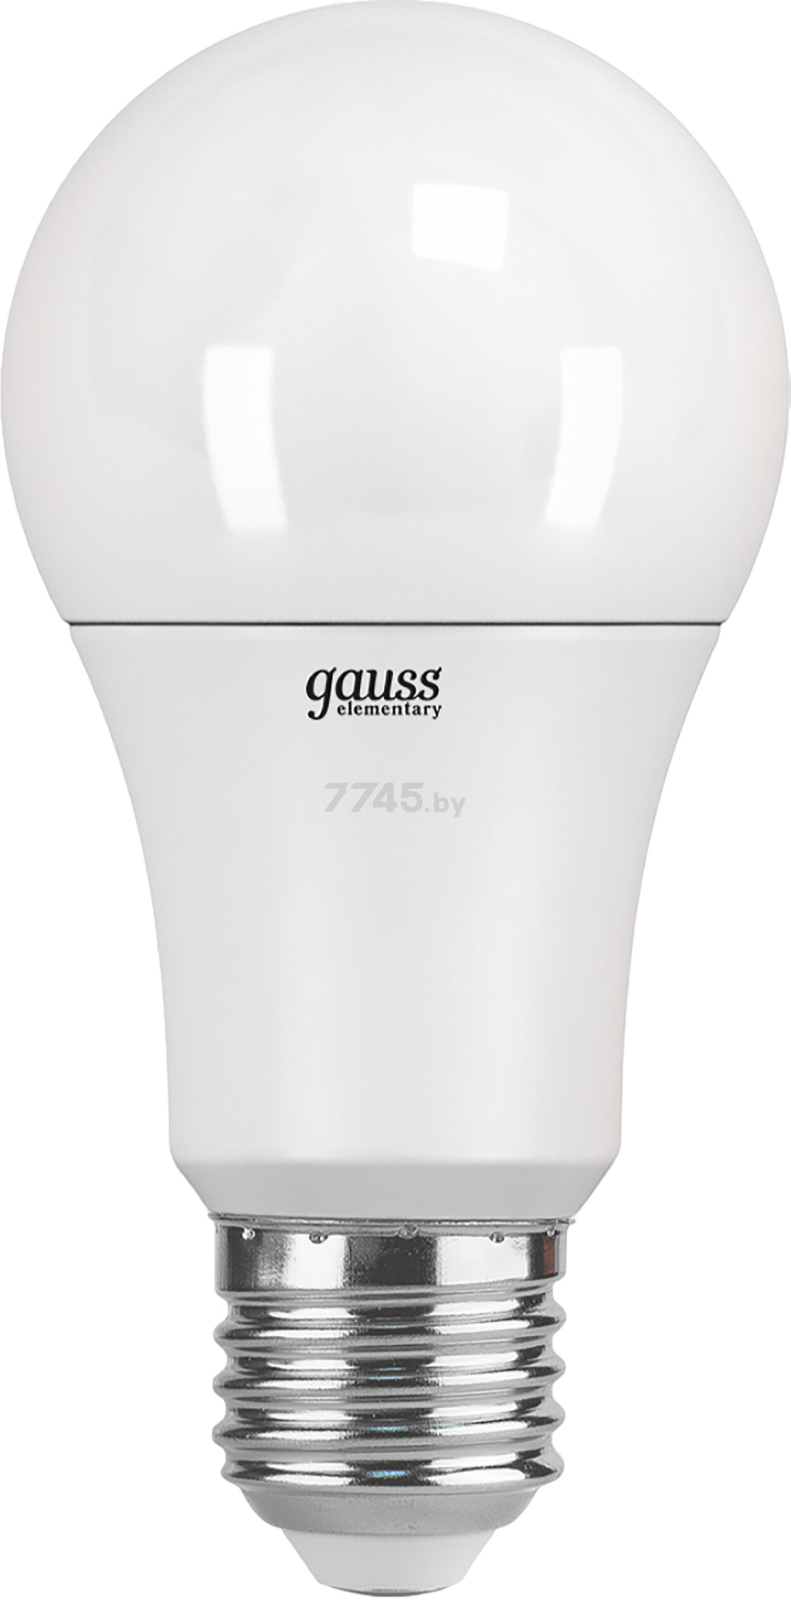 Лампа светодиодная E27 GAUSS Elementary 12 Вт 2700K 2 штуки (23212P)